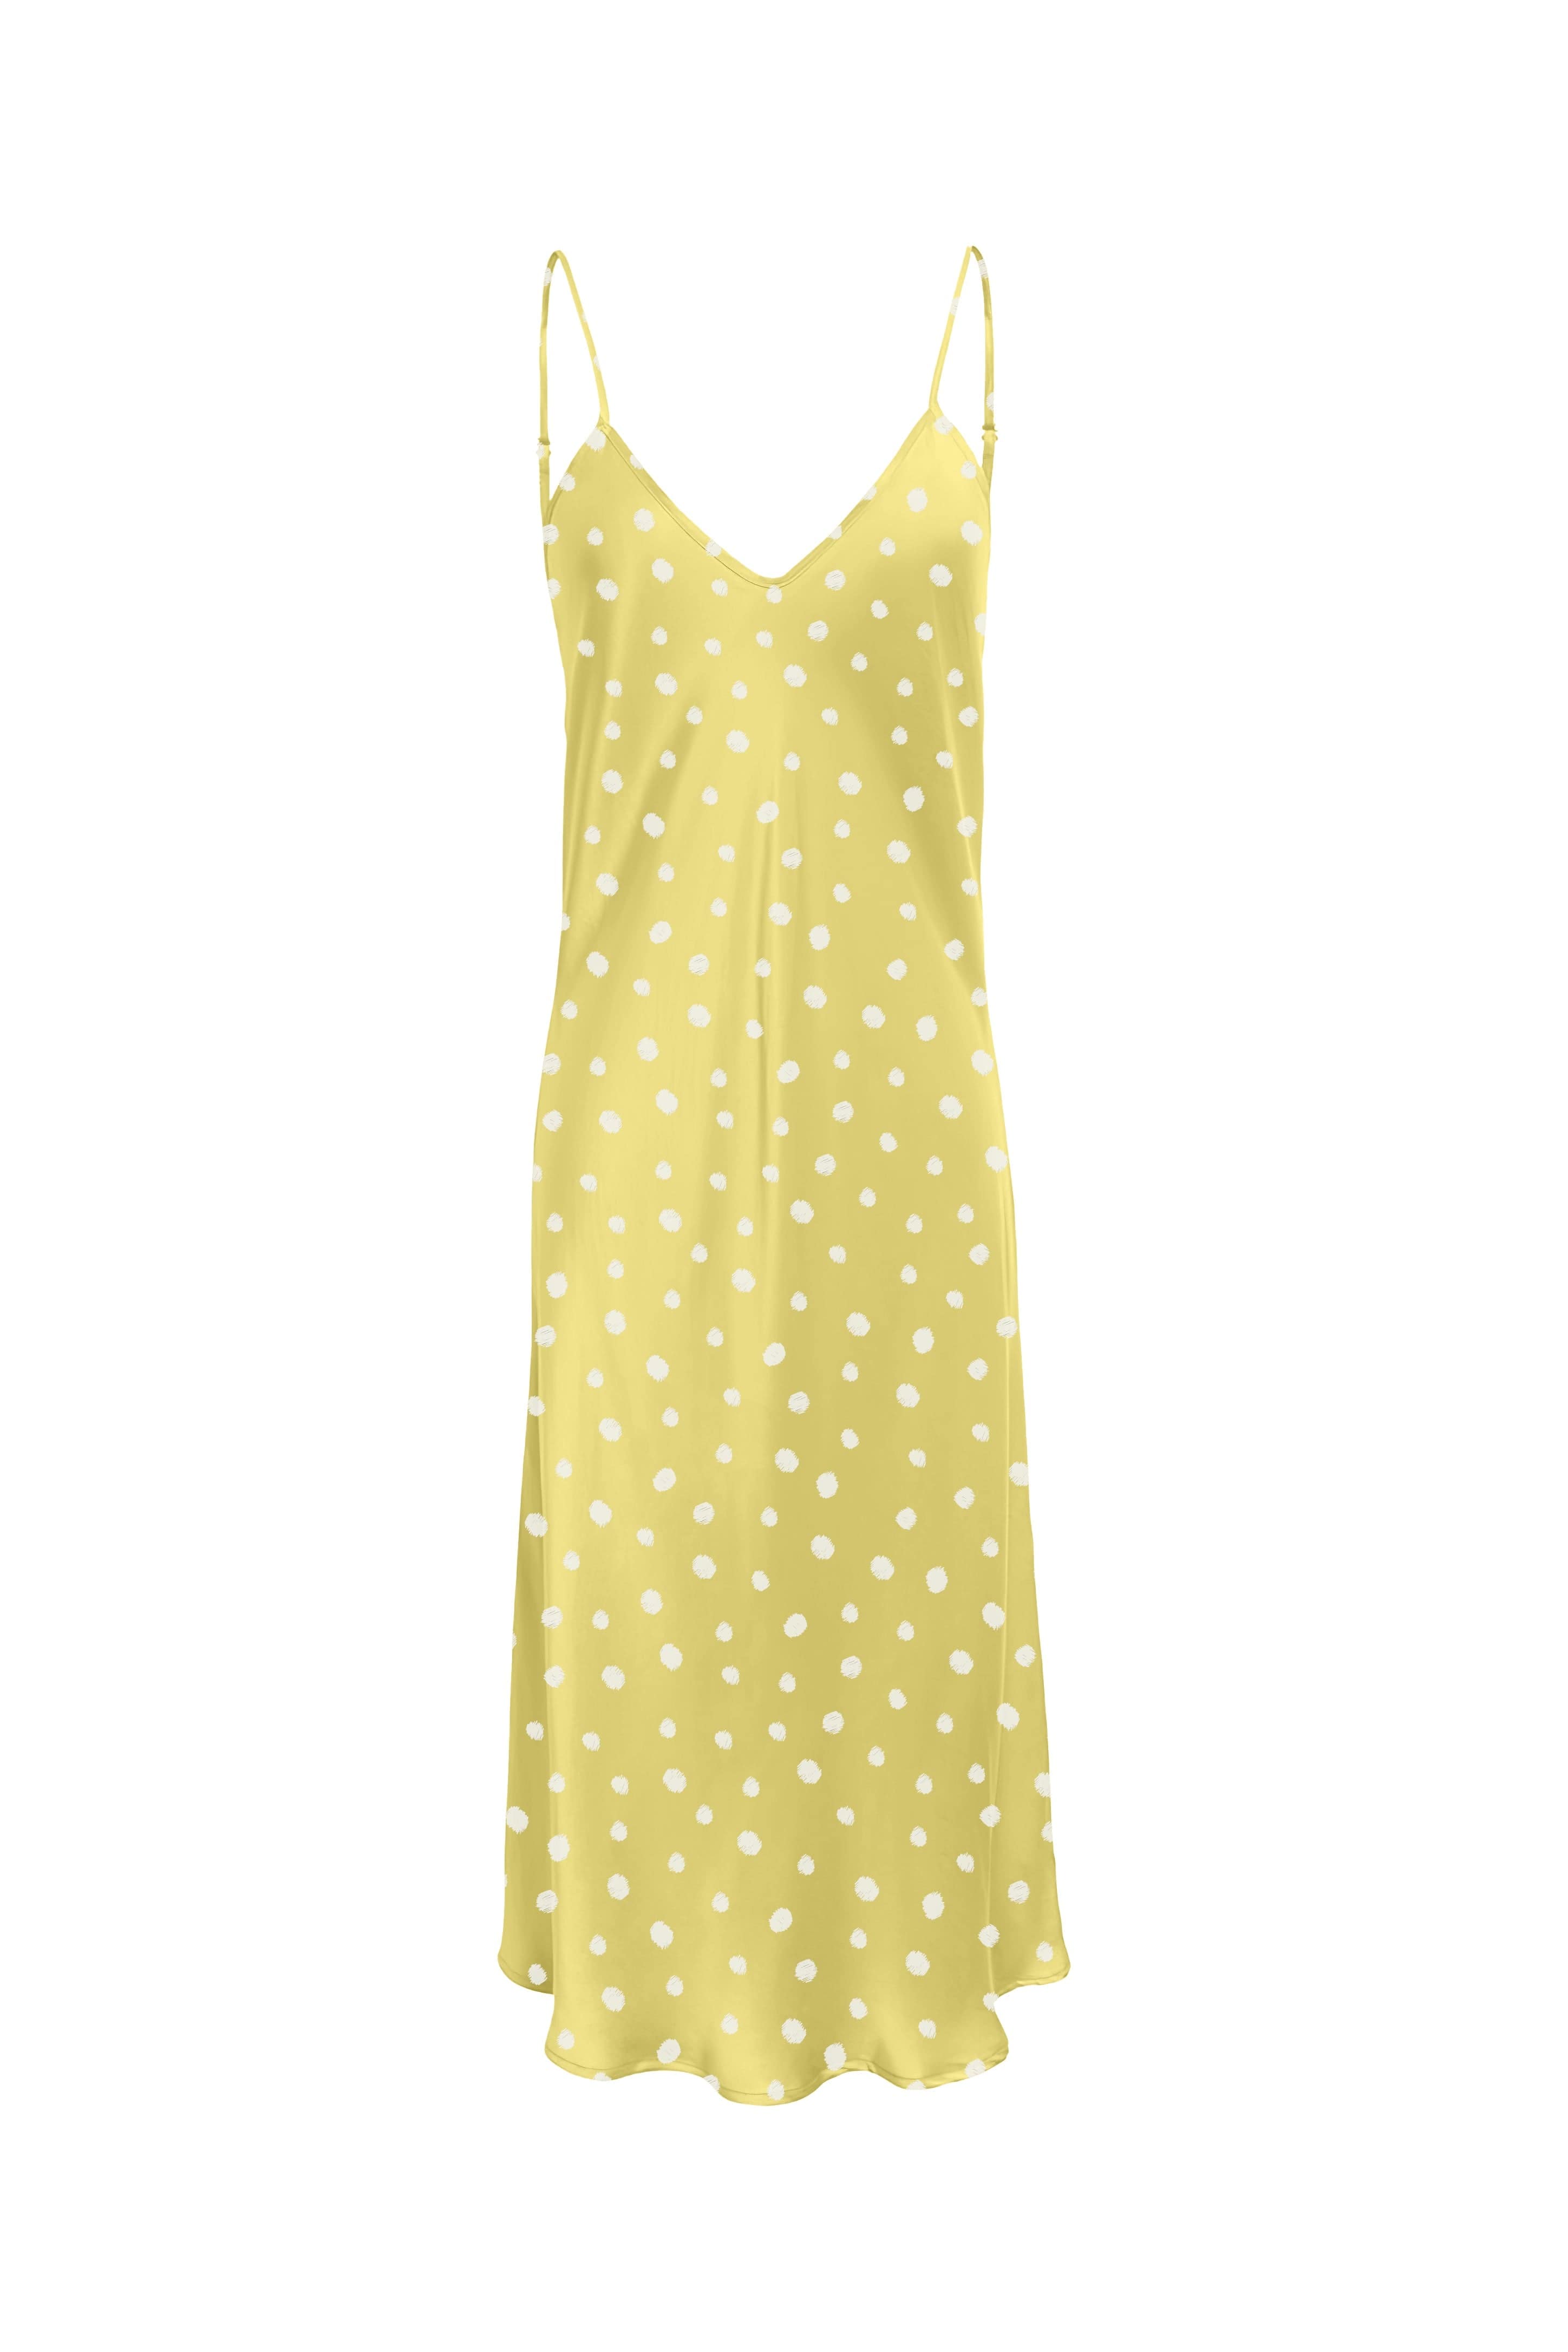 Sunshine yellow dress with polka dot print by Studio Misri